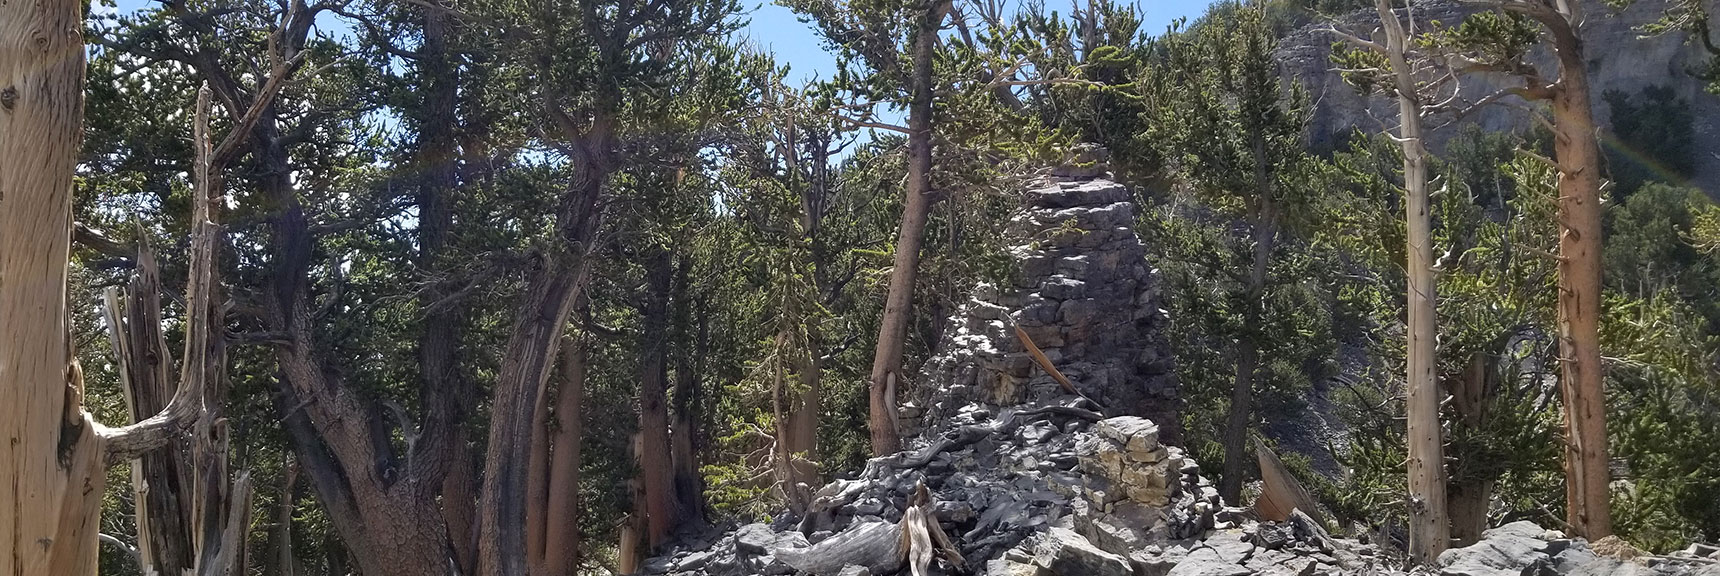 Limestone Brick Pillar Created by Nature? How? | Grand Circuit Loop Cougar Ridge Trail, Mummy Mountain Knees | Mummy Mountain Toe | Mummy Springs | Raintree | Fletcher Peak | Mt Charleston Wilderness | Spring Mountains, Nevada